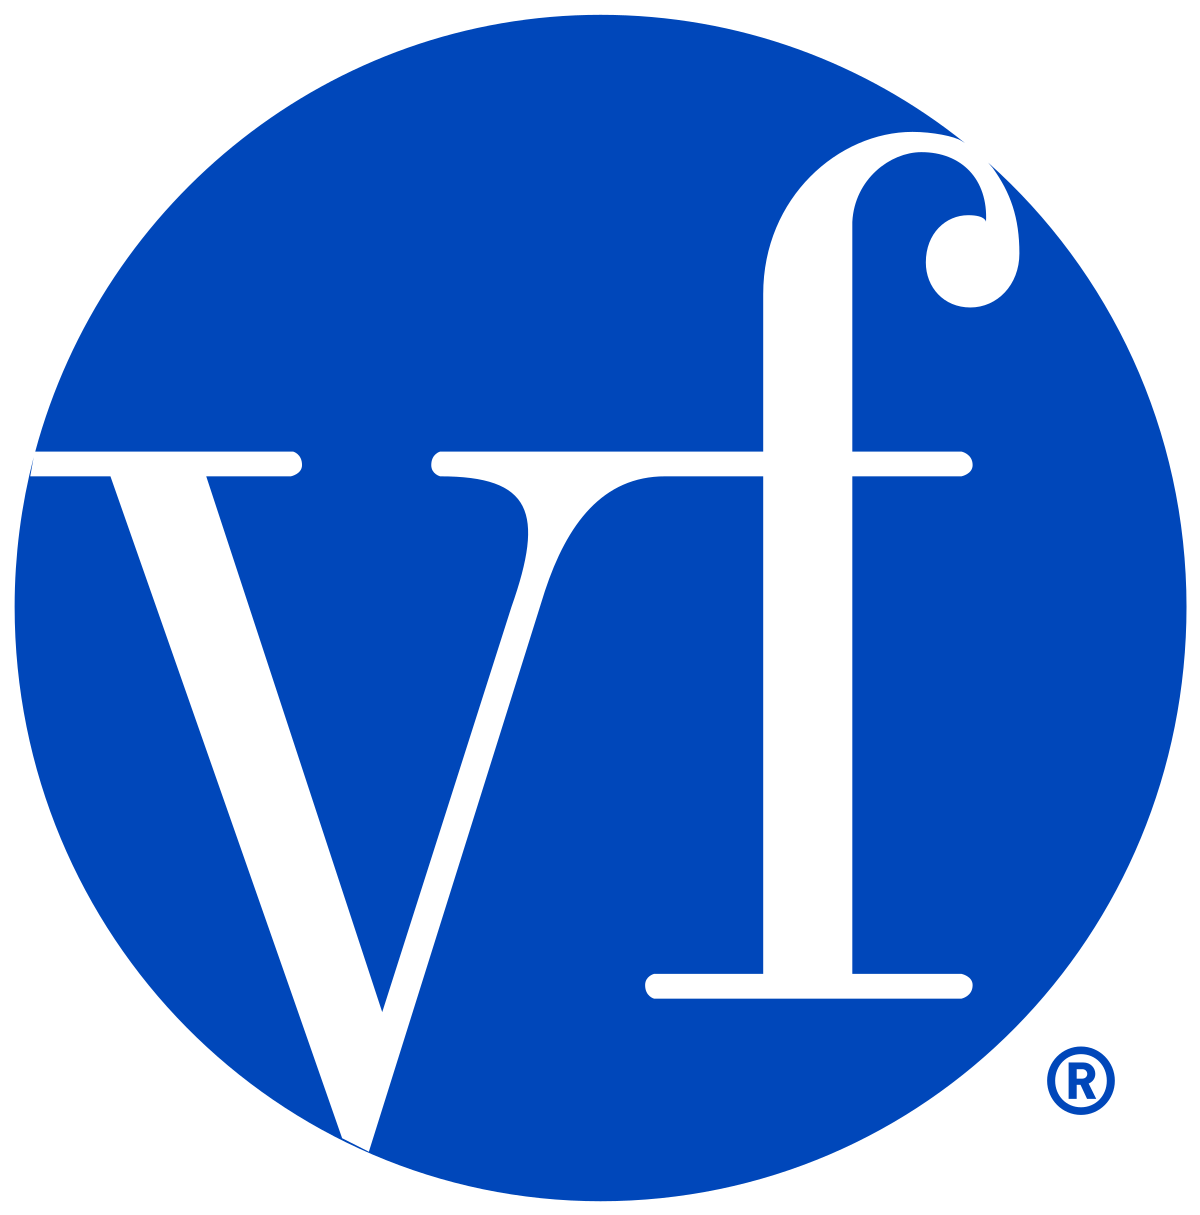 VF_Corporation_logo.svg_.png